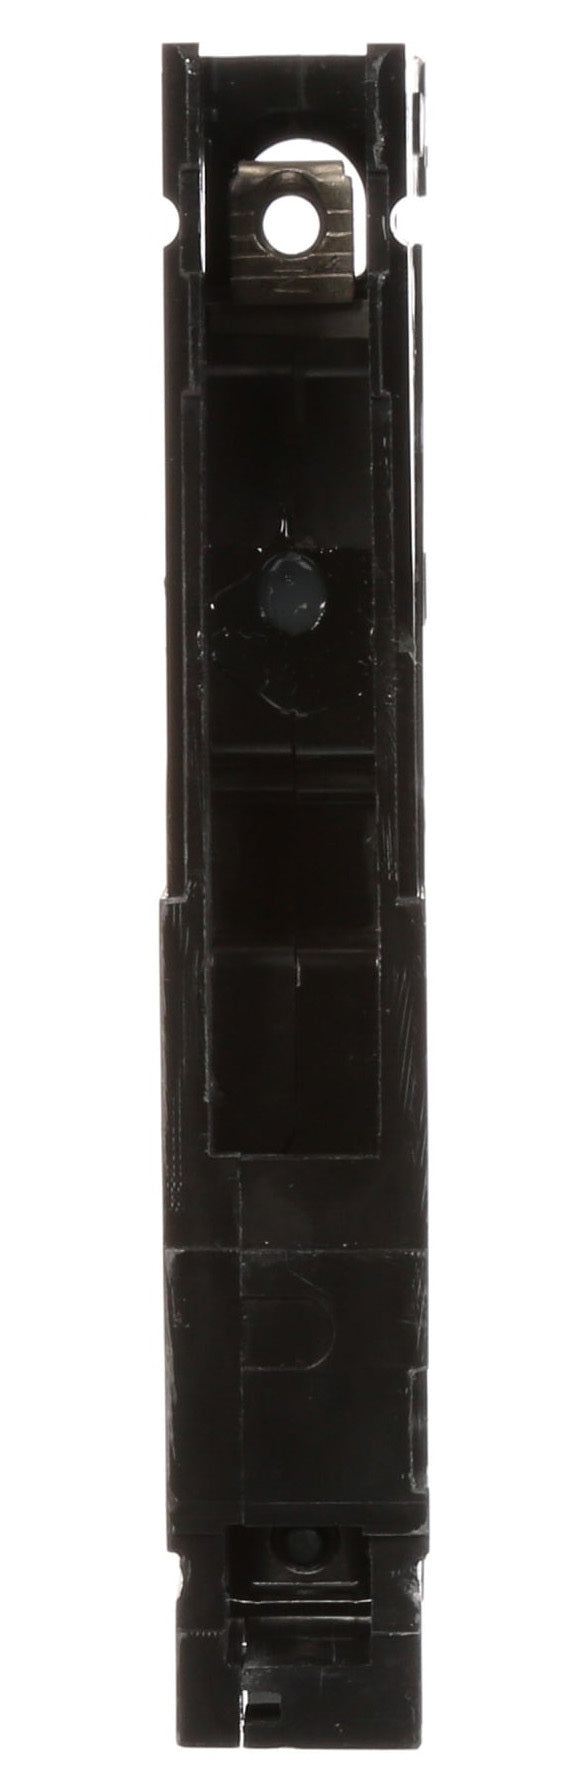 ED21B045 - Siemens - Molded Case Circuit Breaker